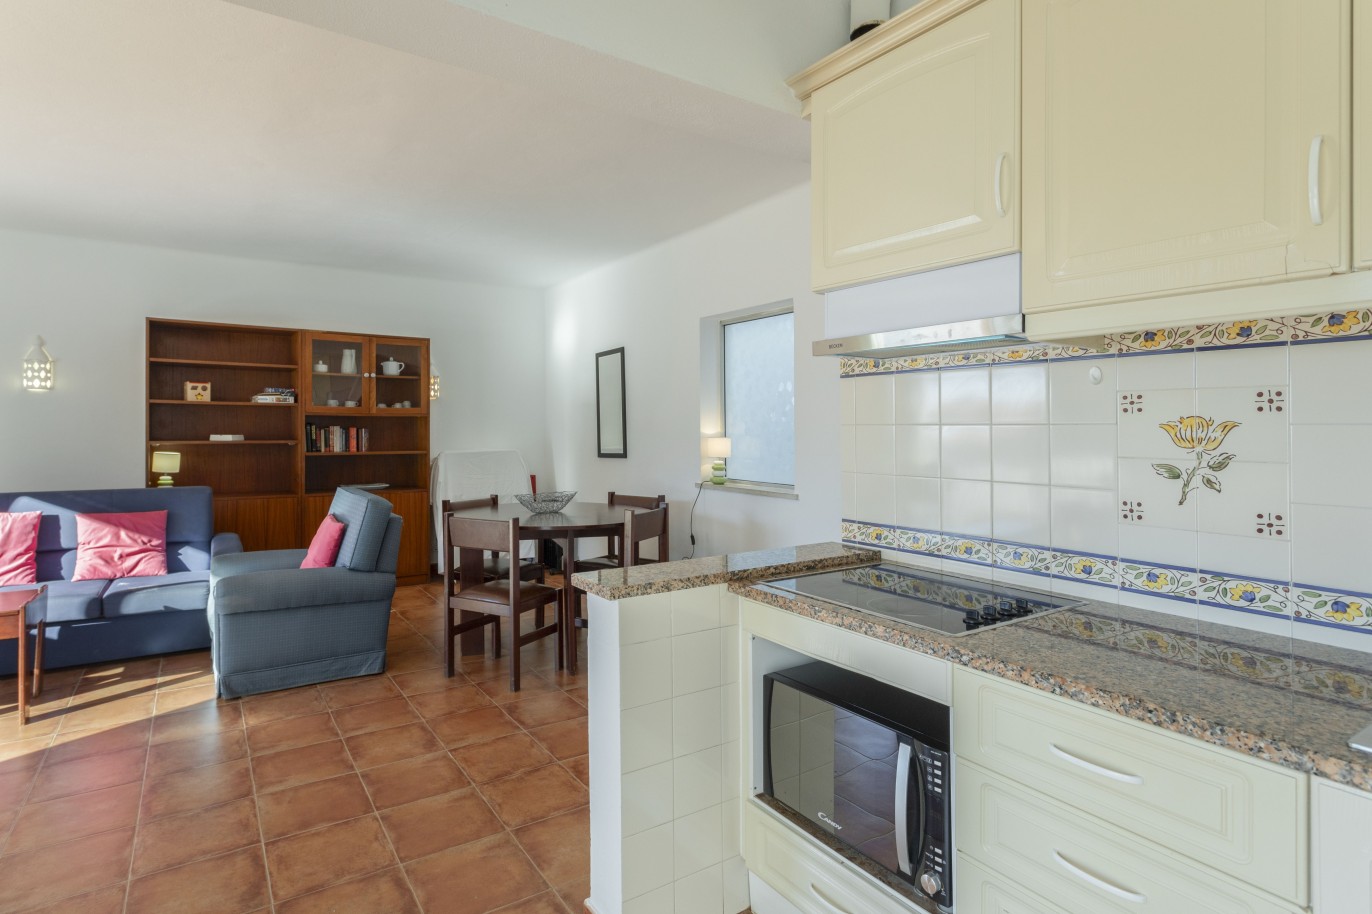 2-bedroom Apartment Duplex, sea view, for sale in Porches, Algarve_247753